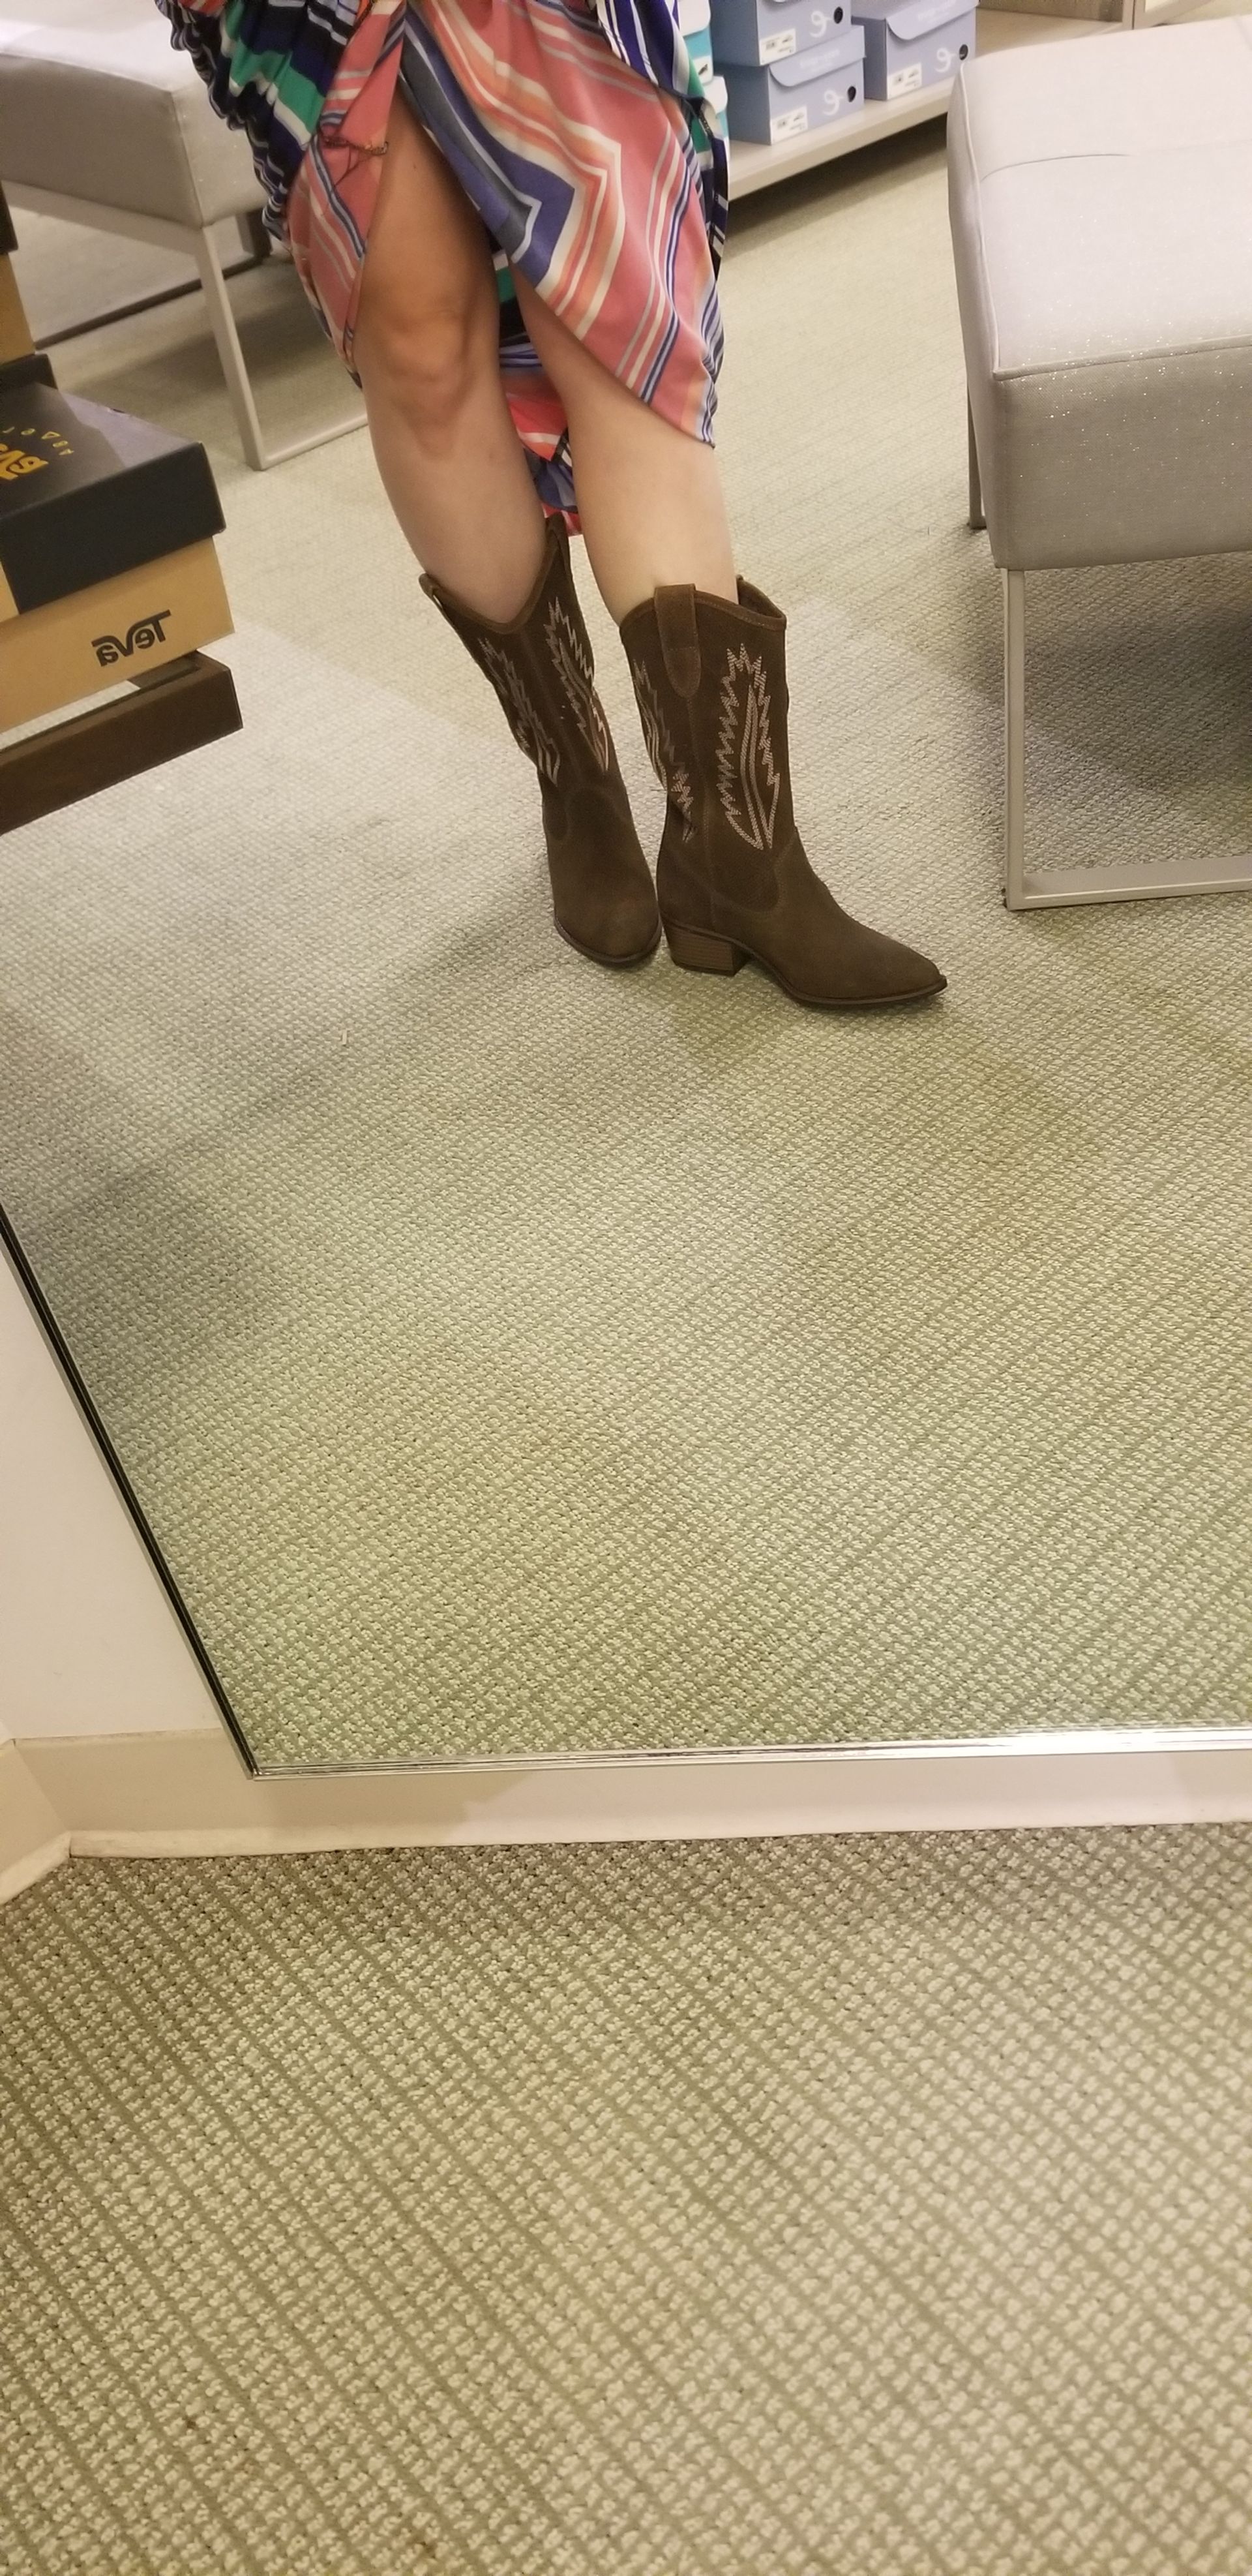 cowboy boots at macy's